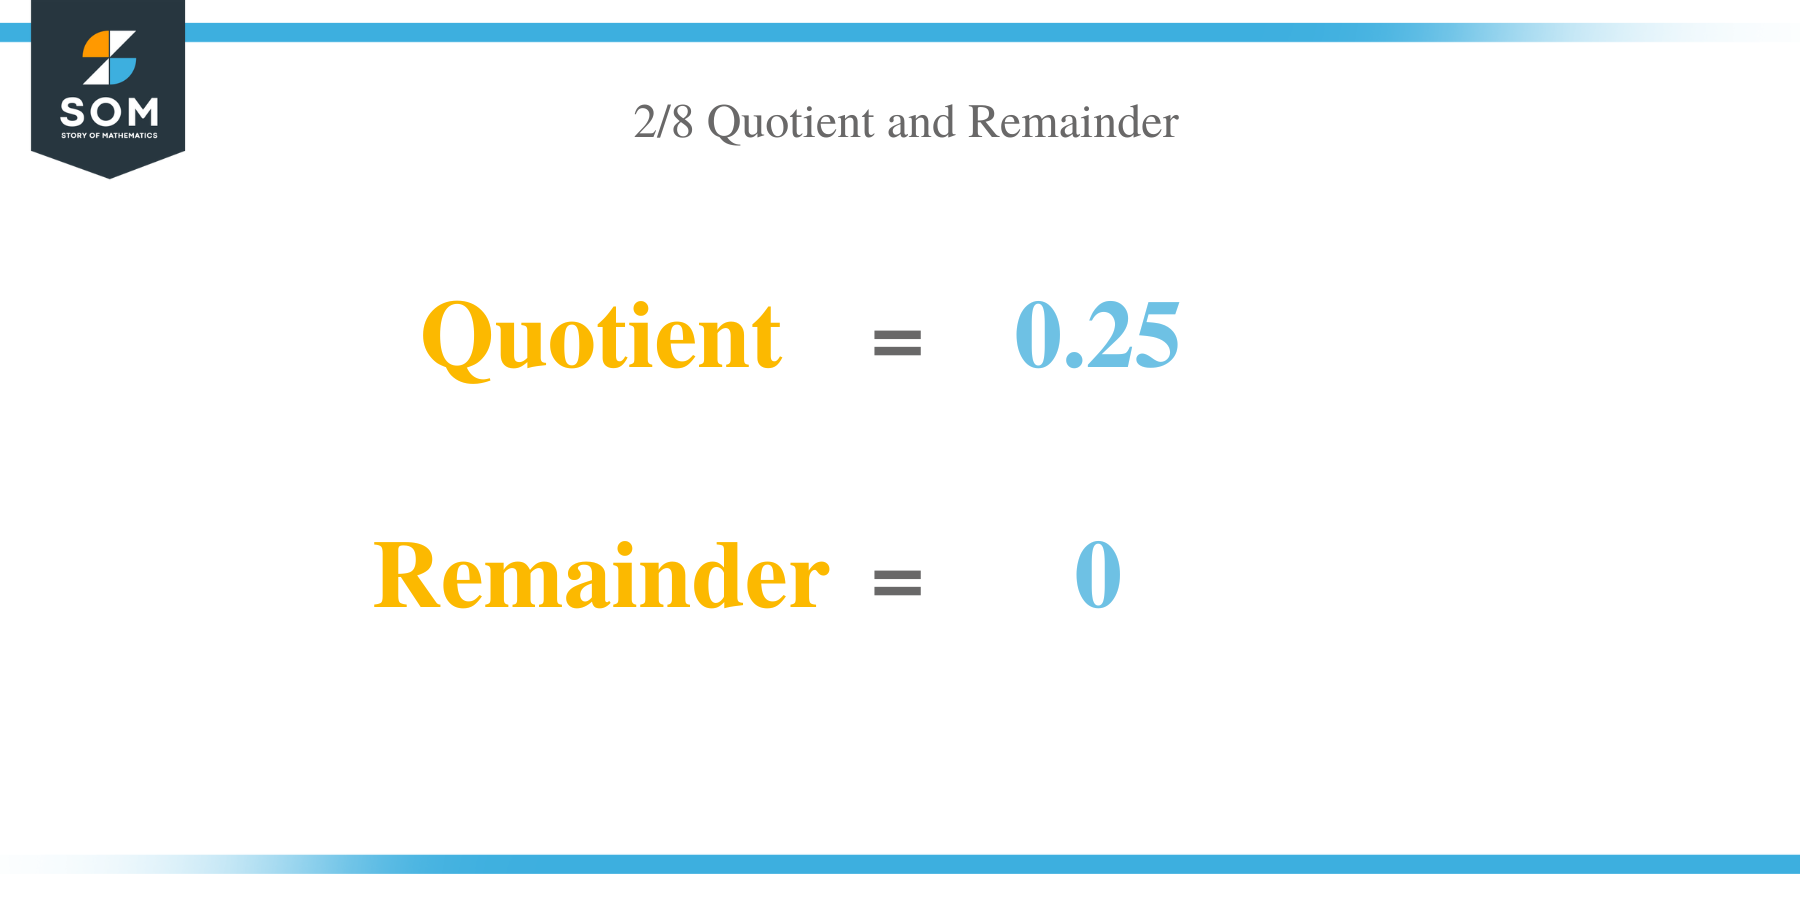 Quotient and remainder of 2 per 8